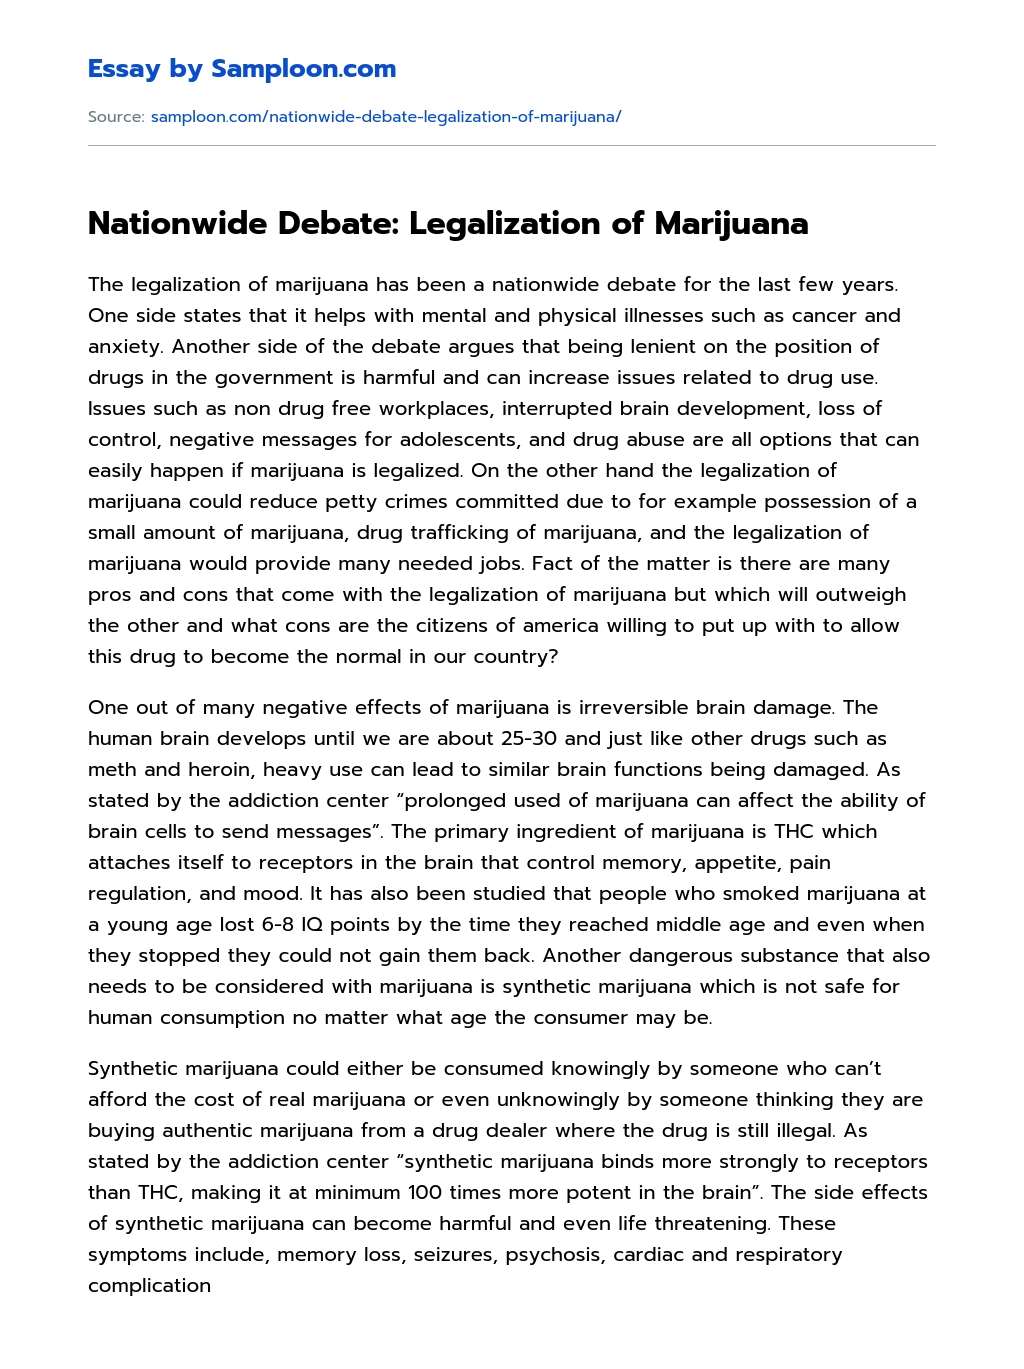 Nationwide Debate: Legalization of Marijuana essay